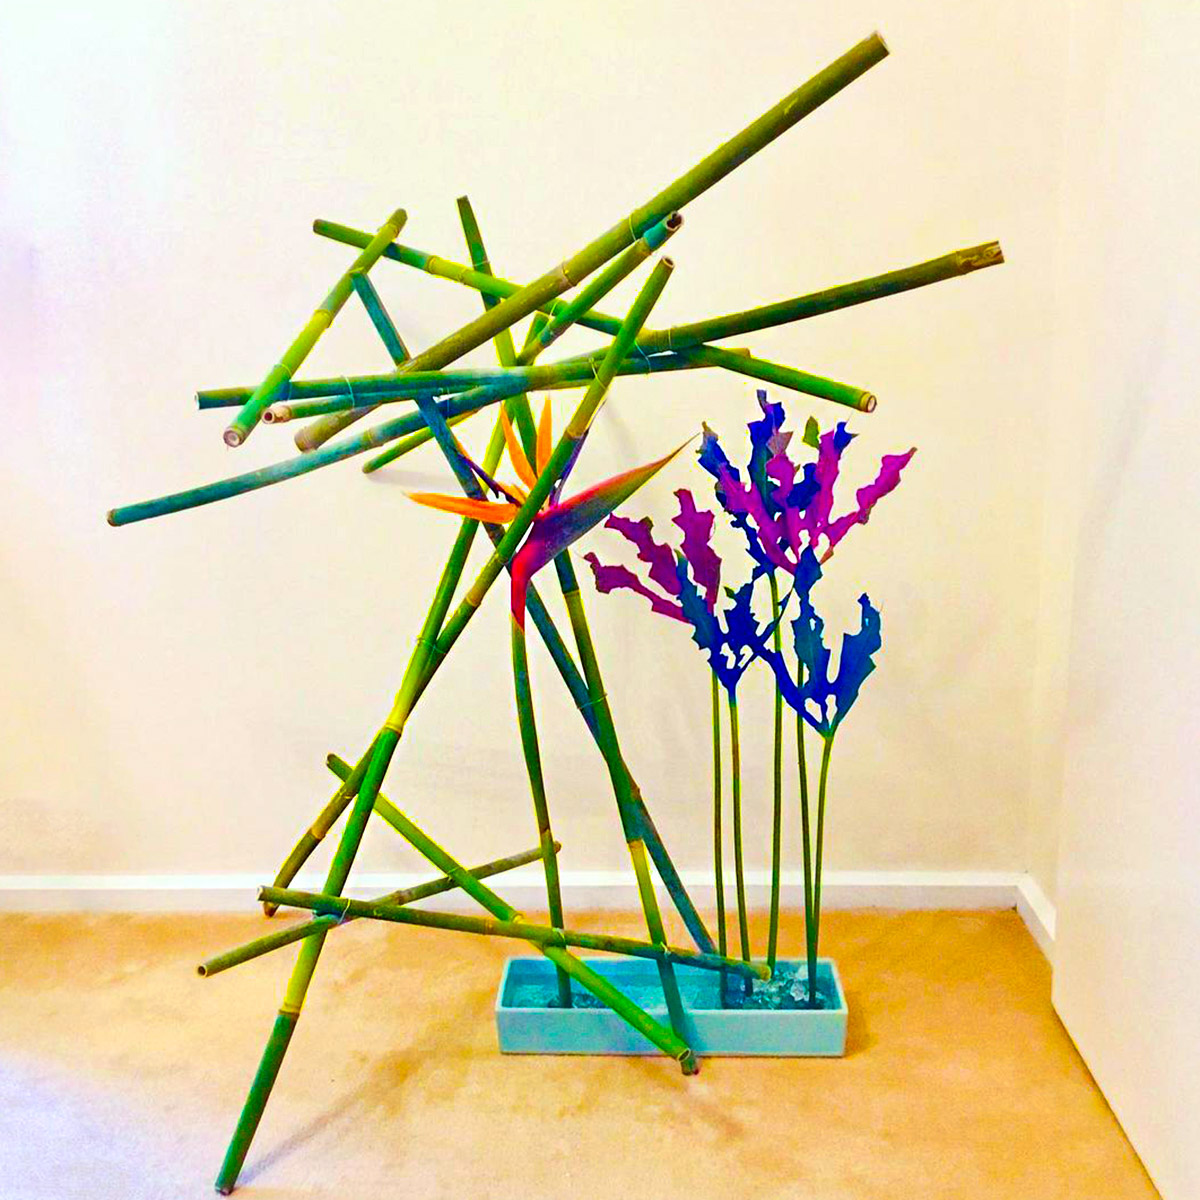 Toula Karanikolopoulos Shows How Ikebana Is the Art of Flower Arrangement 06